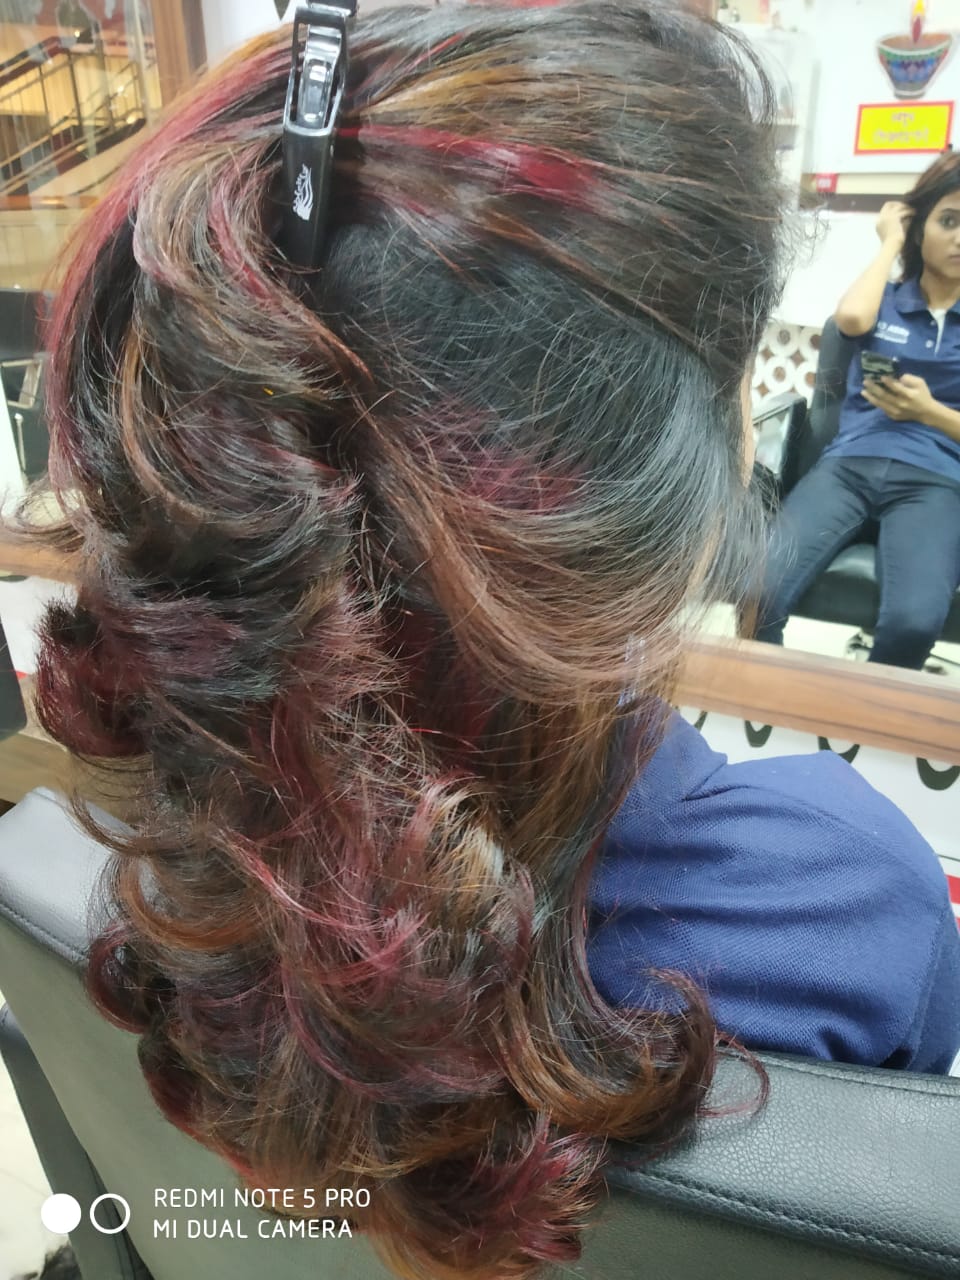 Jawed Habib Hair & Beauty Salon in Hadapsar, Pune-411028 | Sulekha Pune